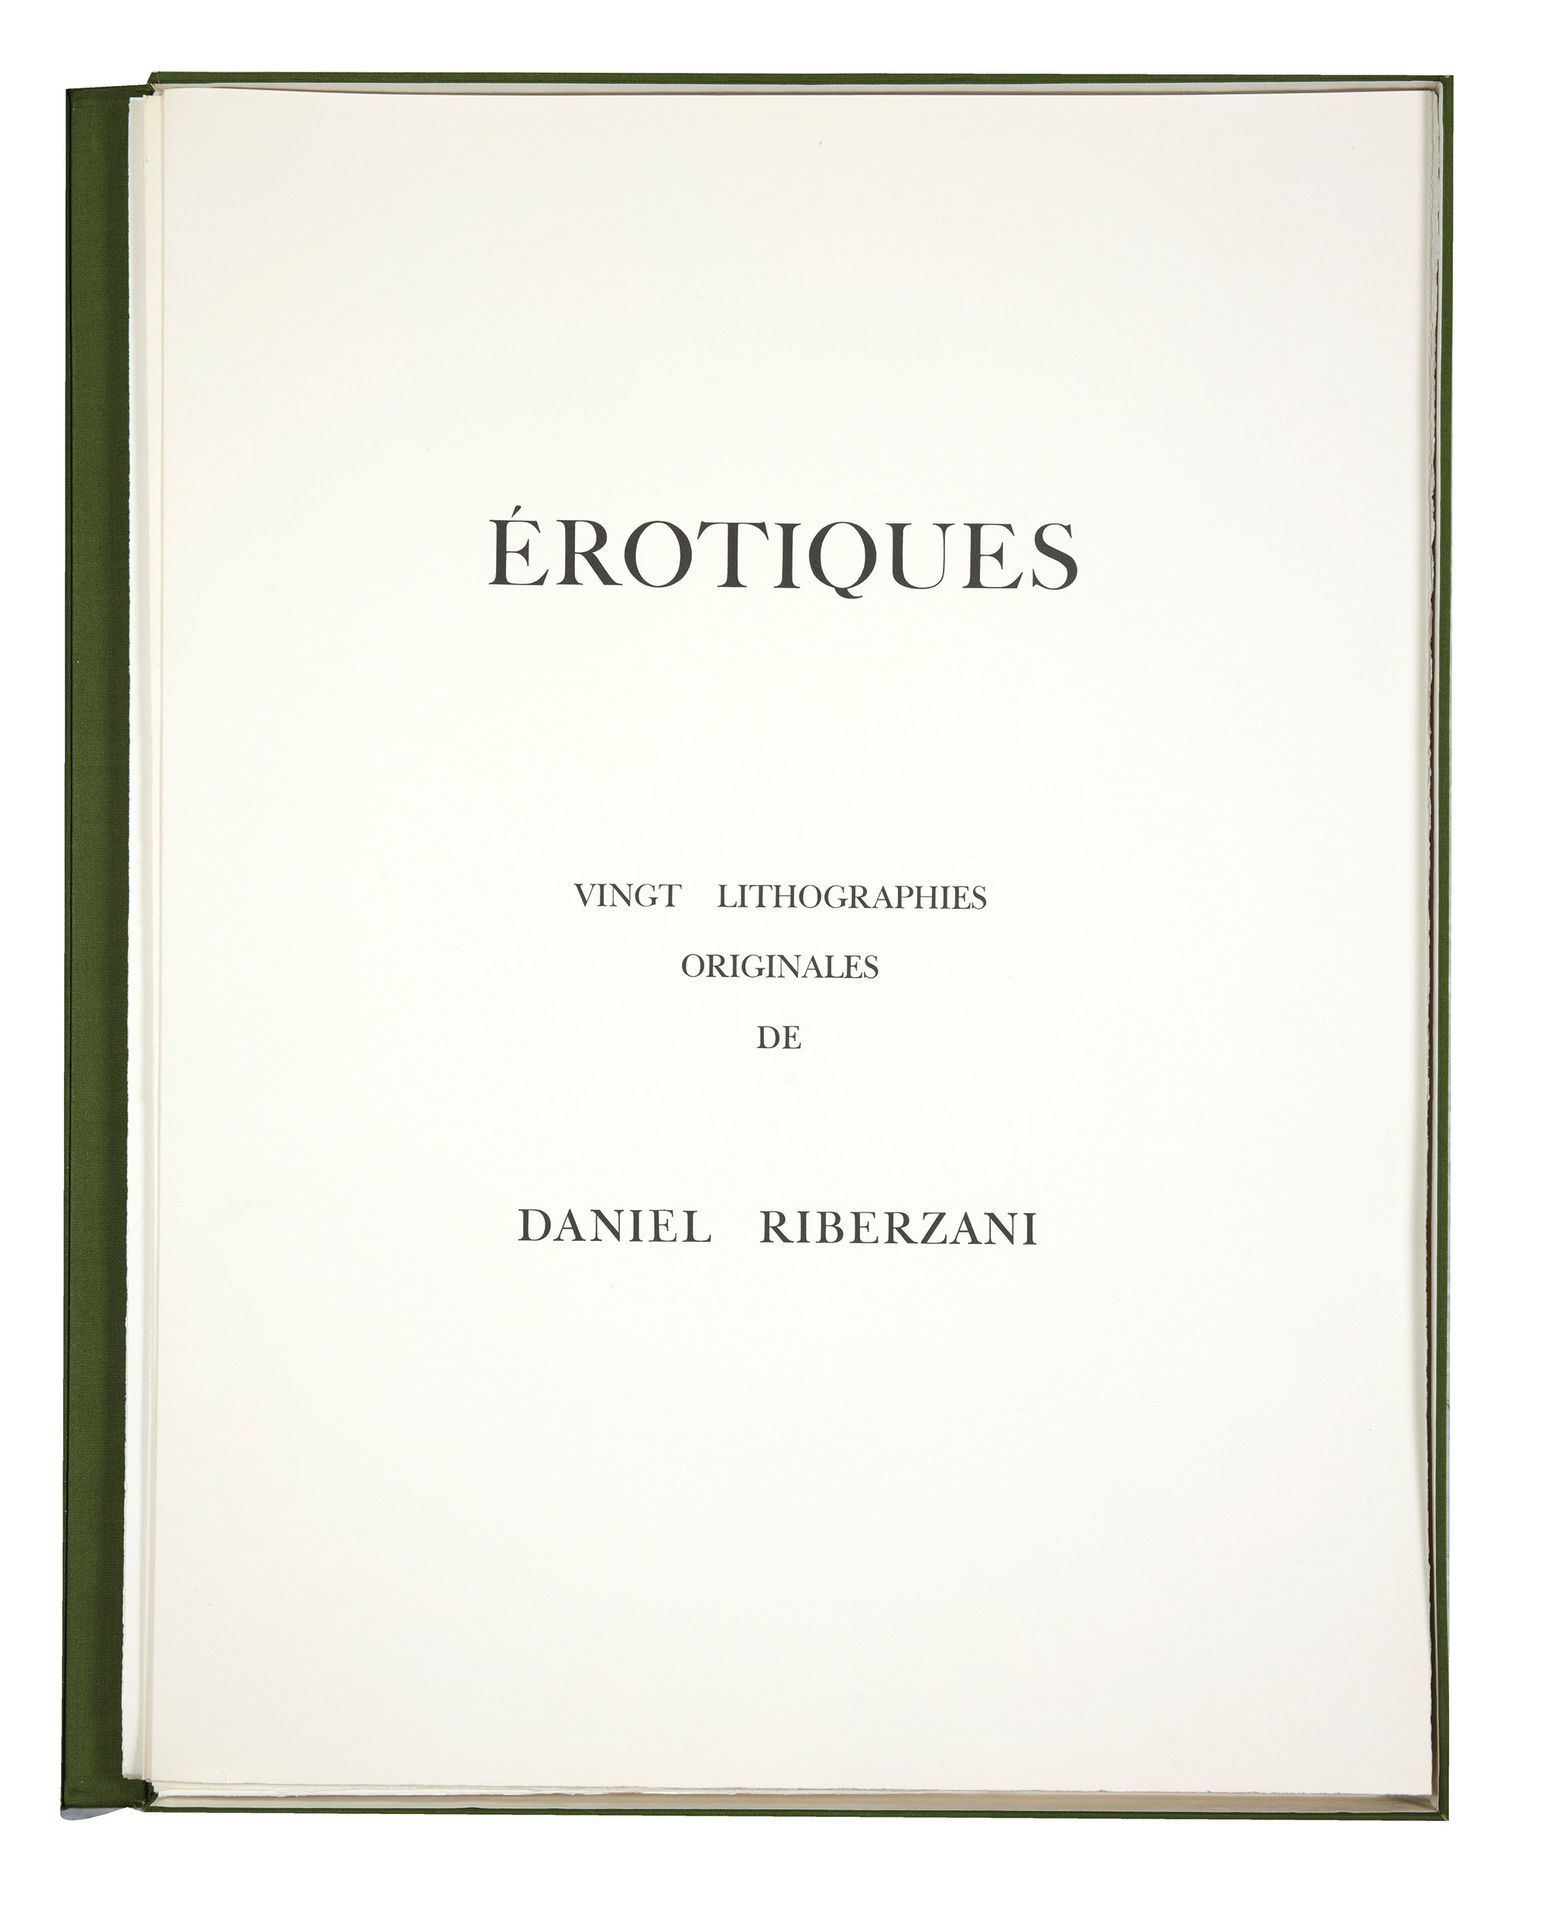 Daniel RIBERZANI Daniel RIBERZANI
Erotiques，20幅原版石版画，1971年，大型内页（67 x 50厘米），包括封面、&hellip;